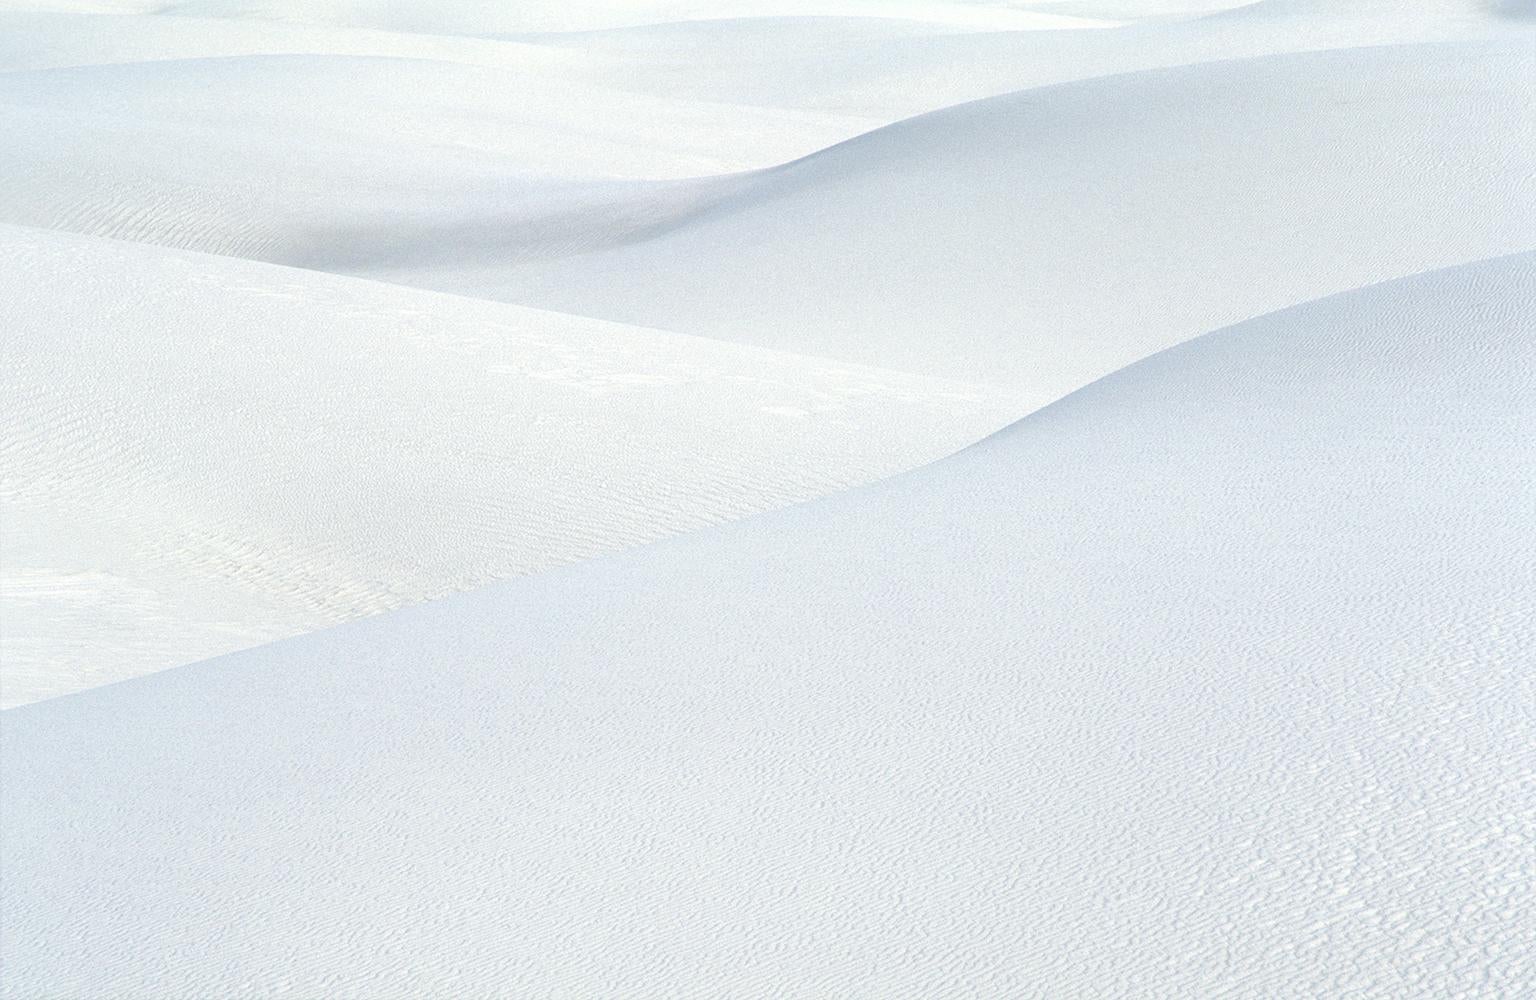  Cosmo Condina Color Photograph - White Sands National Park, USA, 2004, Ver. 2